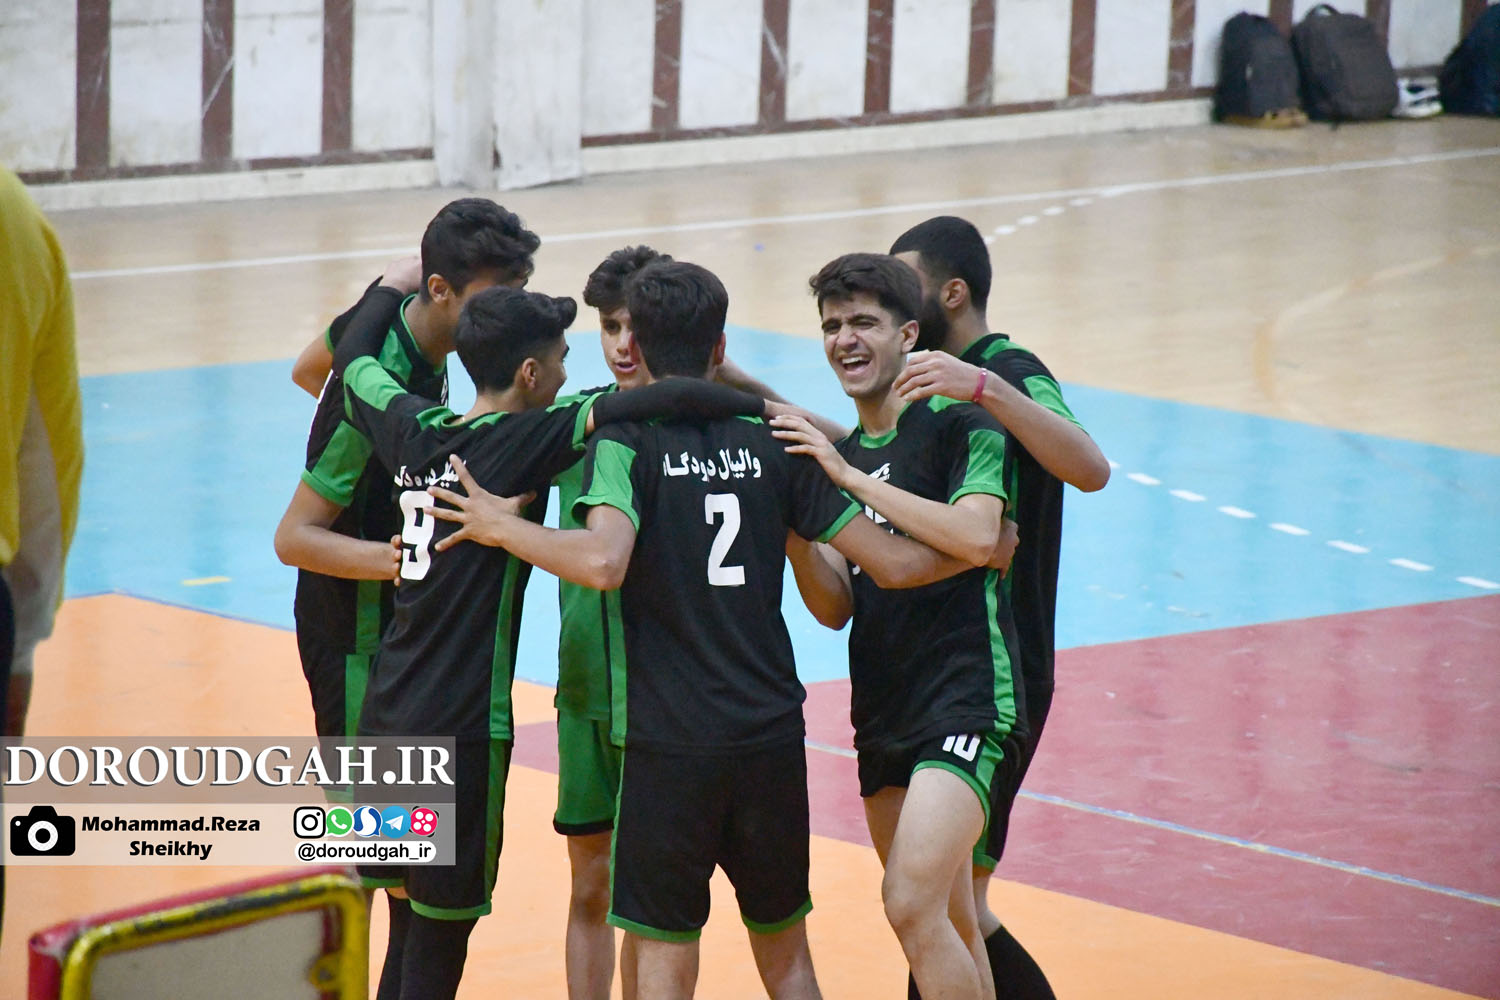 جوانان دورودگاه 3 – 0 سعدآباد / سکوی قهرمانی جام رمضان زیر پای جوانان دورودگاهی